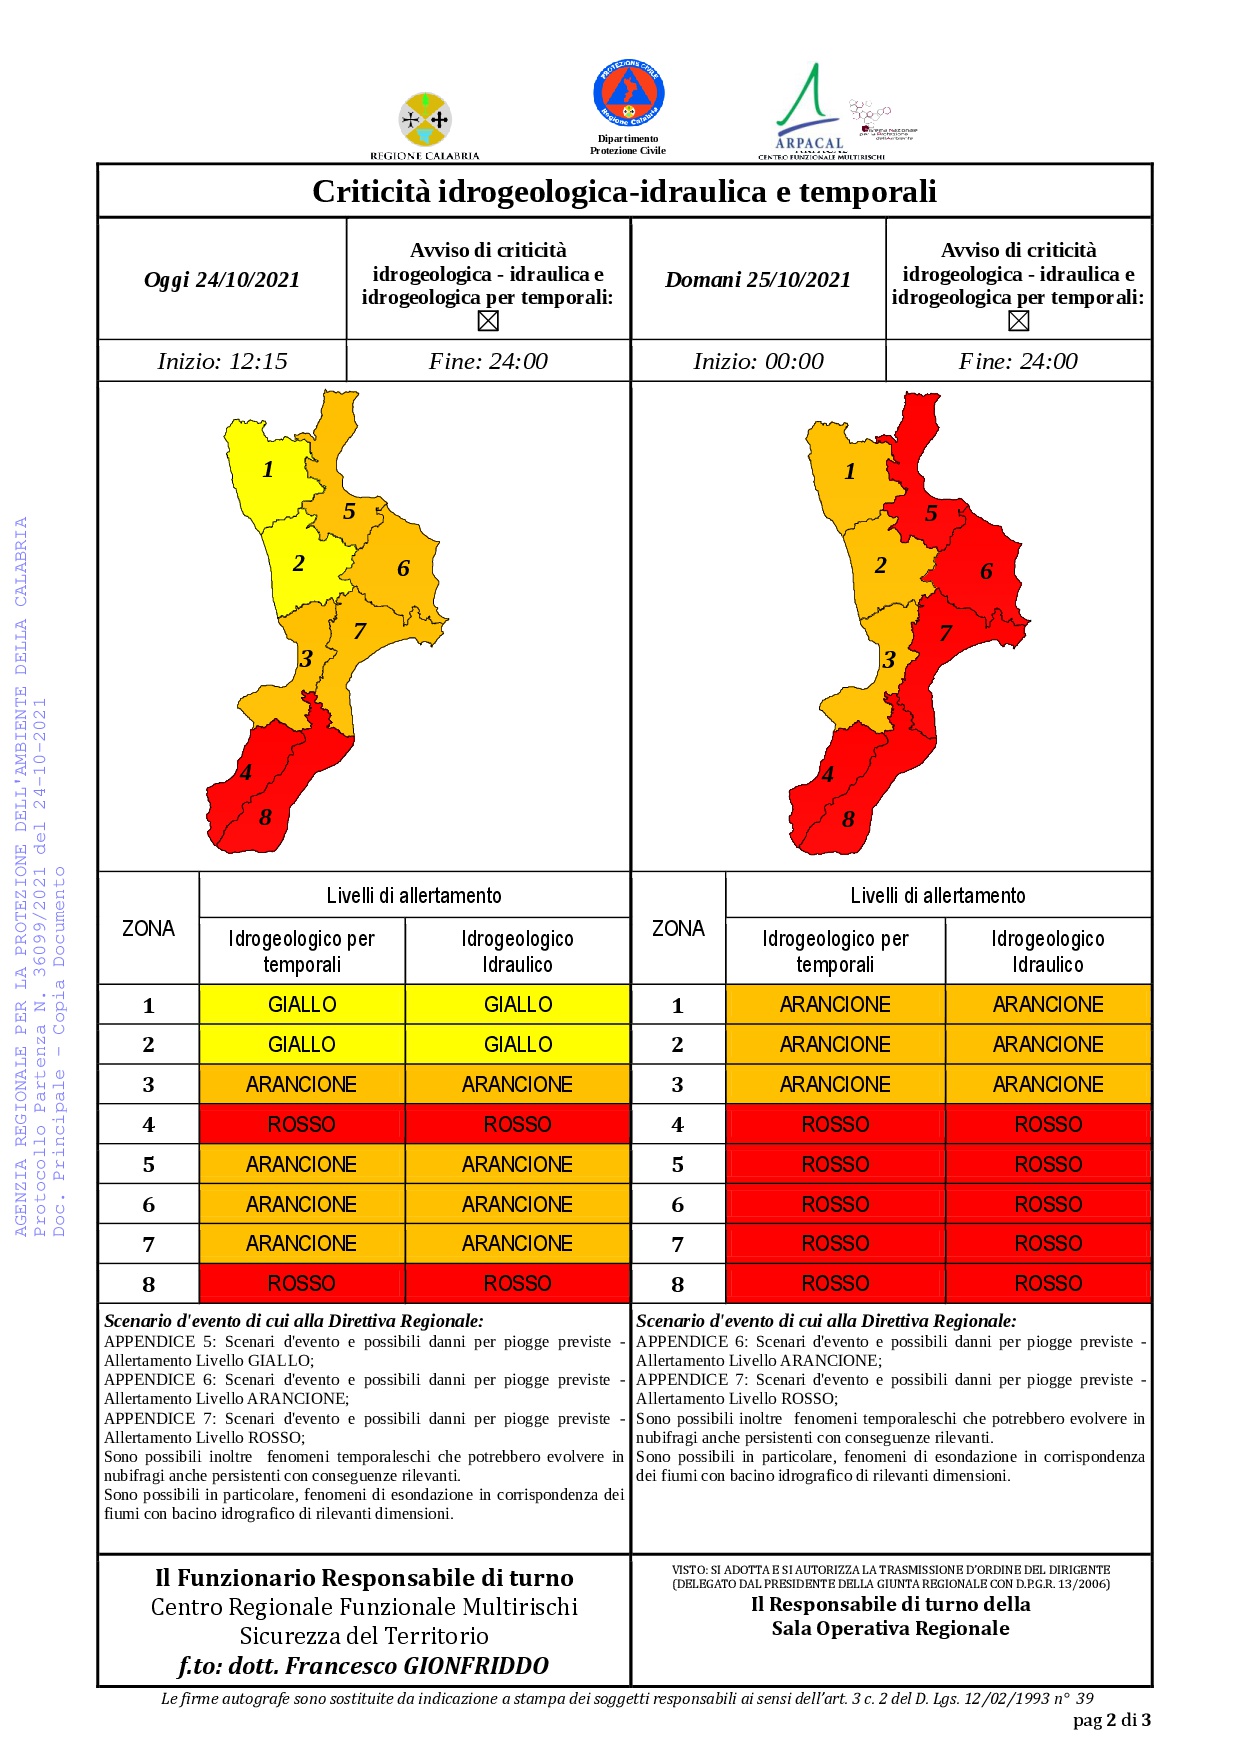 Criticità idrogeologica-idraulica e temporali in Calabria 24-10-2021